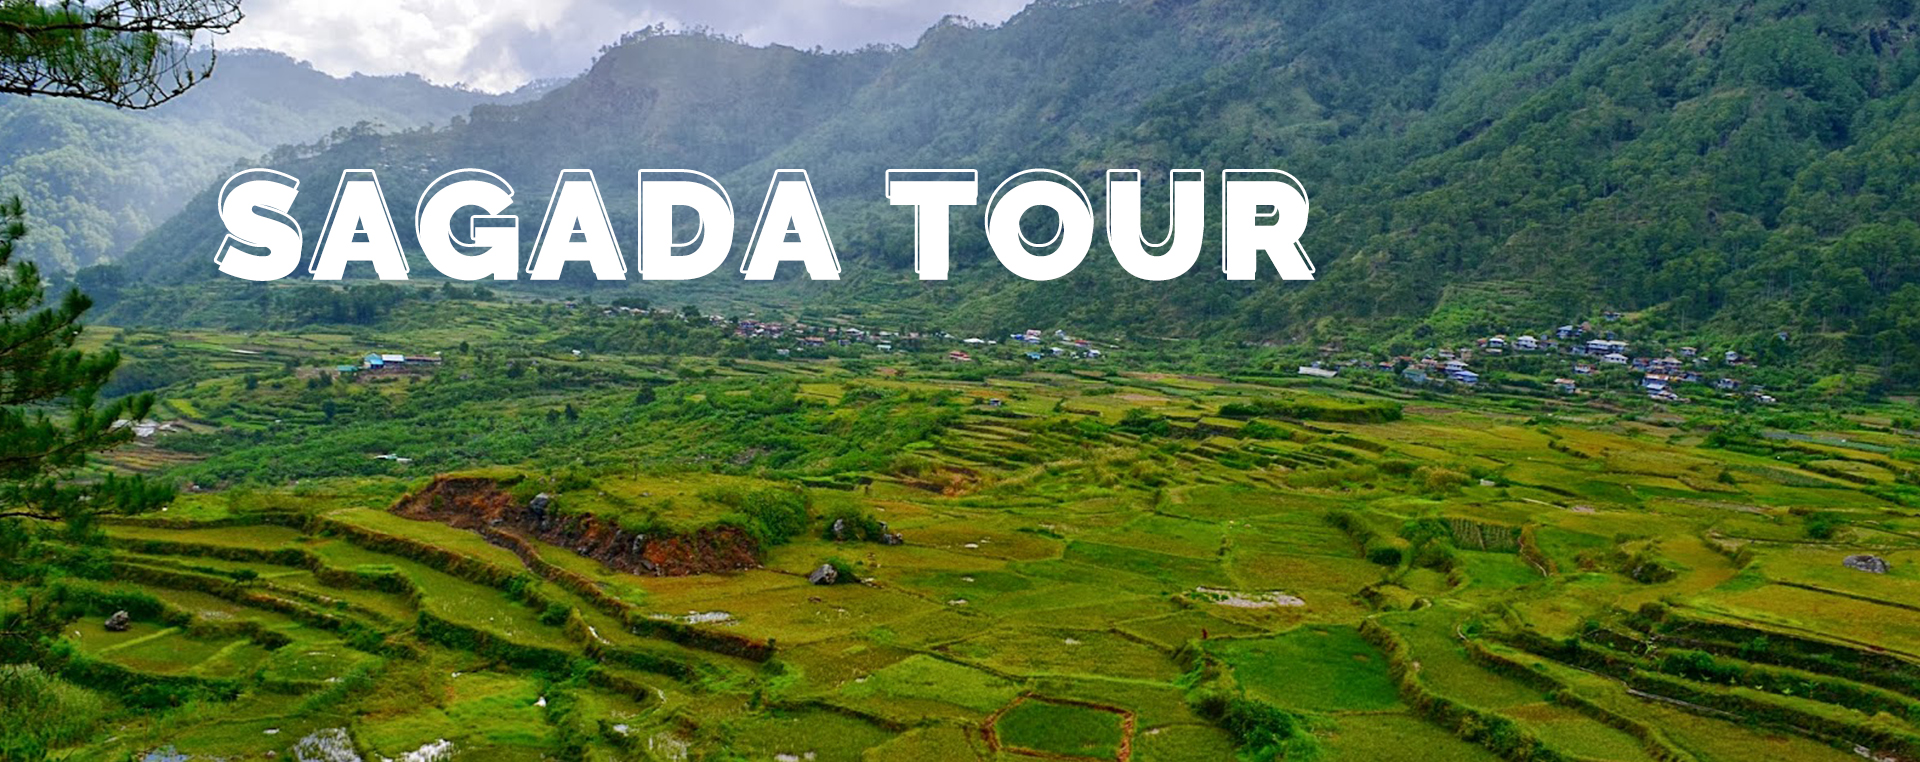 Sagada Tour Package Harry Travel And Tours